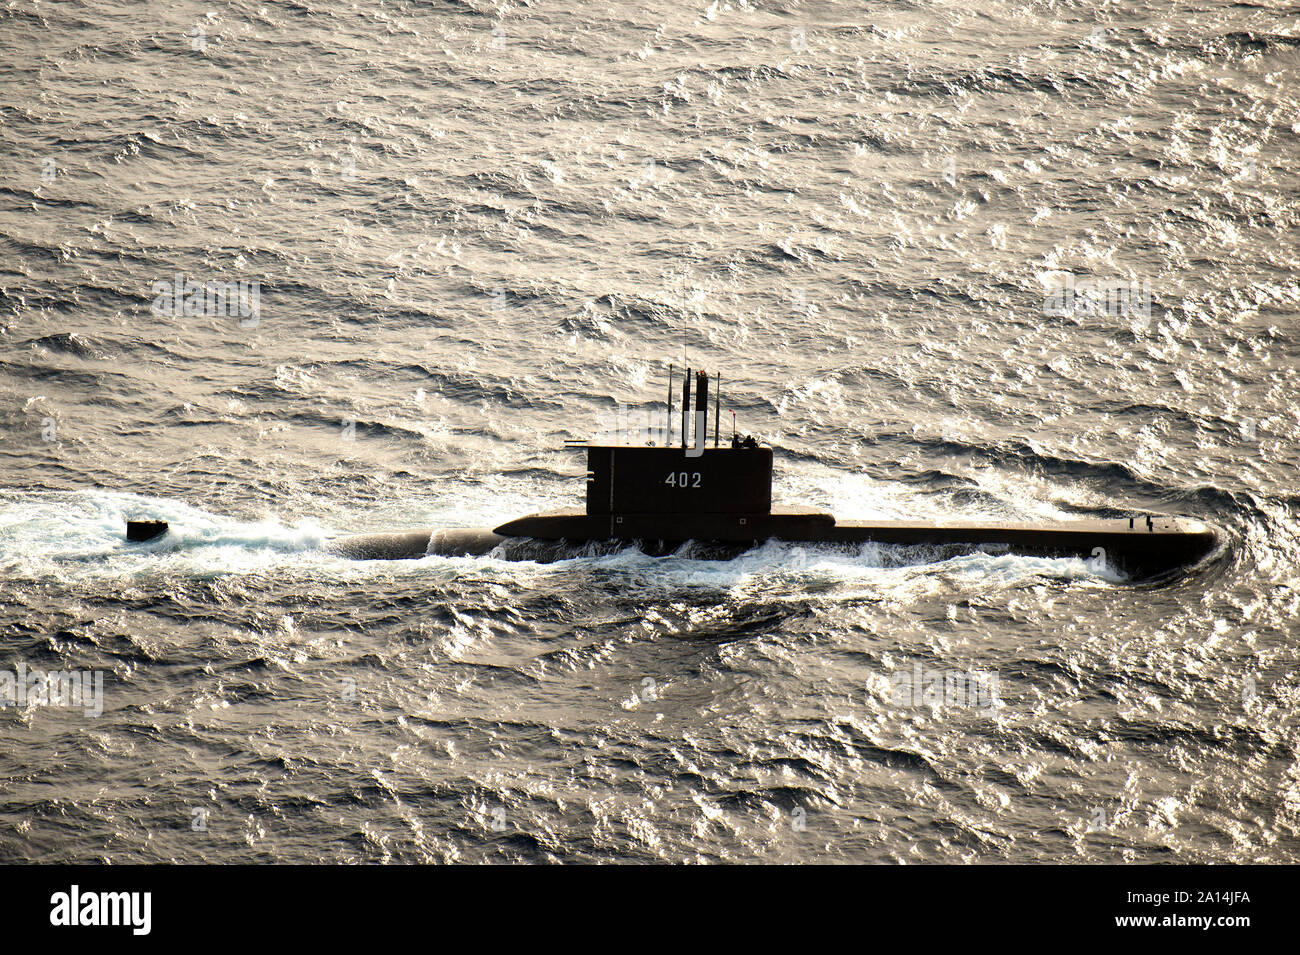 The Indonesian submarine KRI Nanggala. Stock Photo